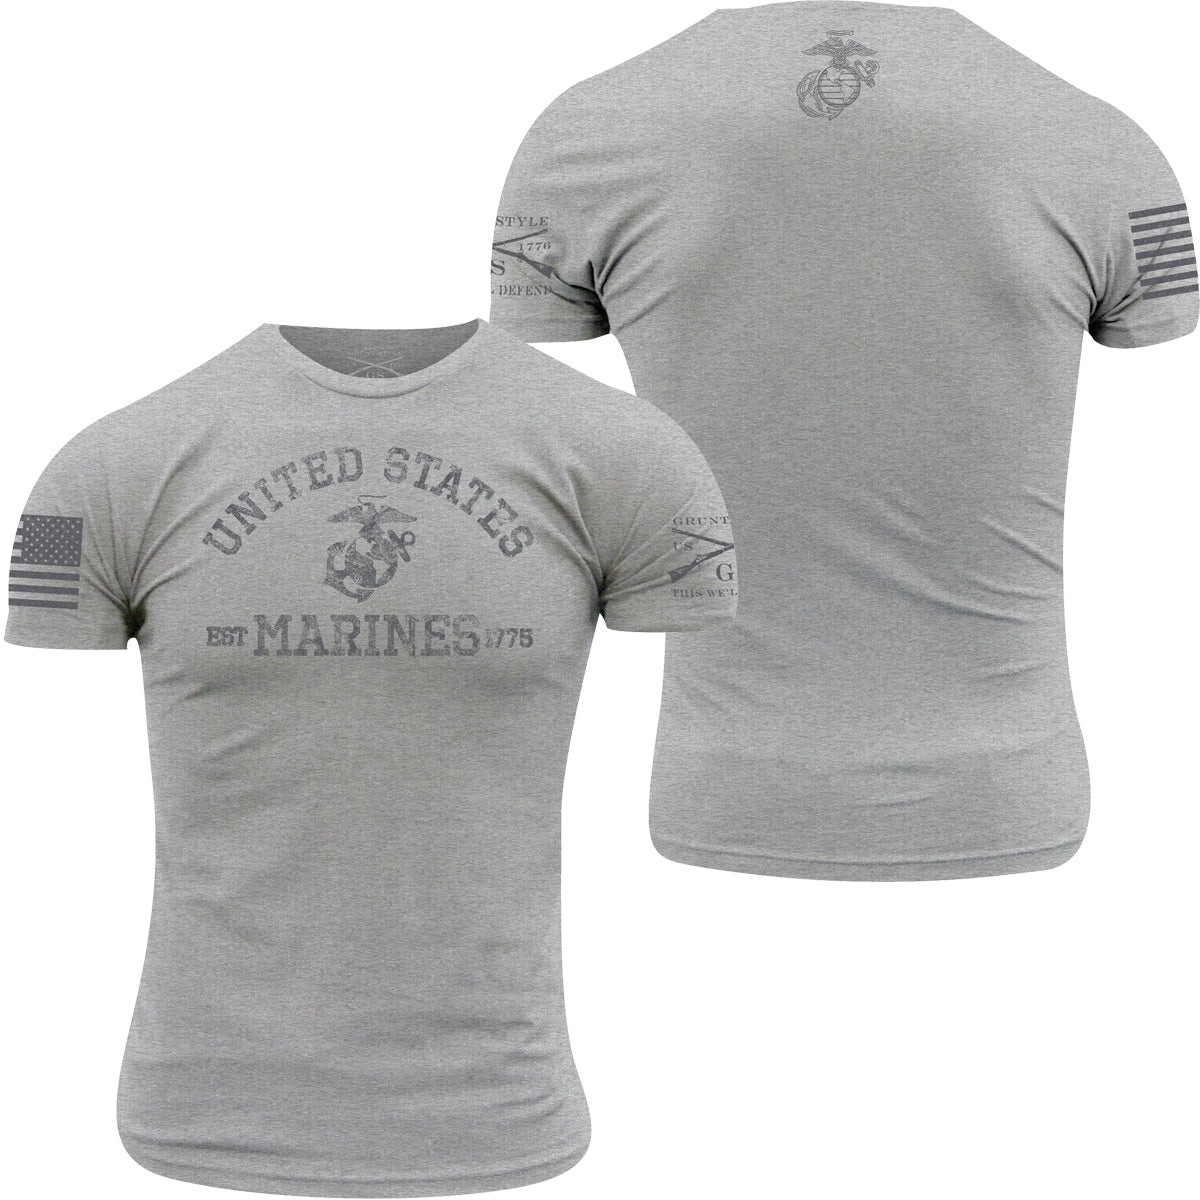 Grunt Style USMC - Est. 1775 T-Shirt - Athletic Heather Grunt Style